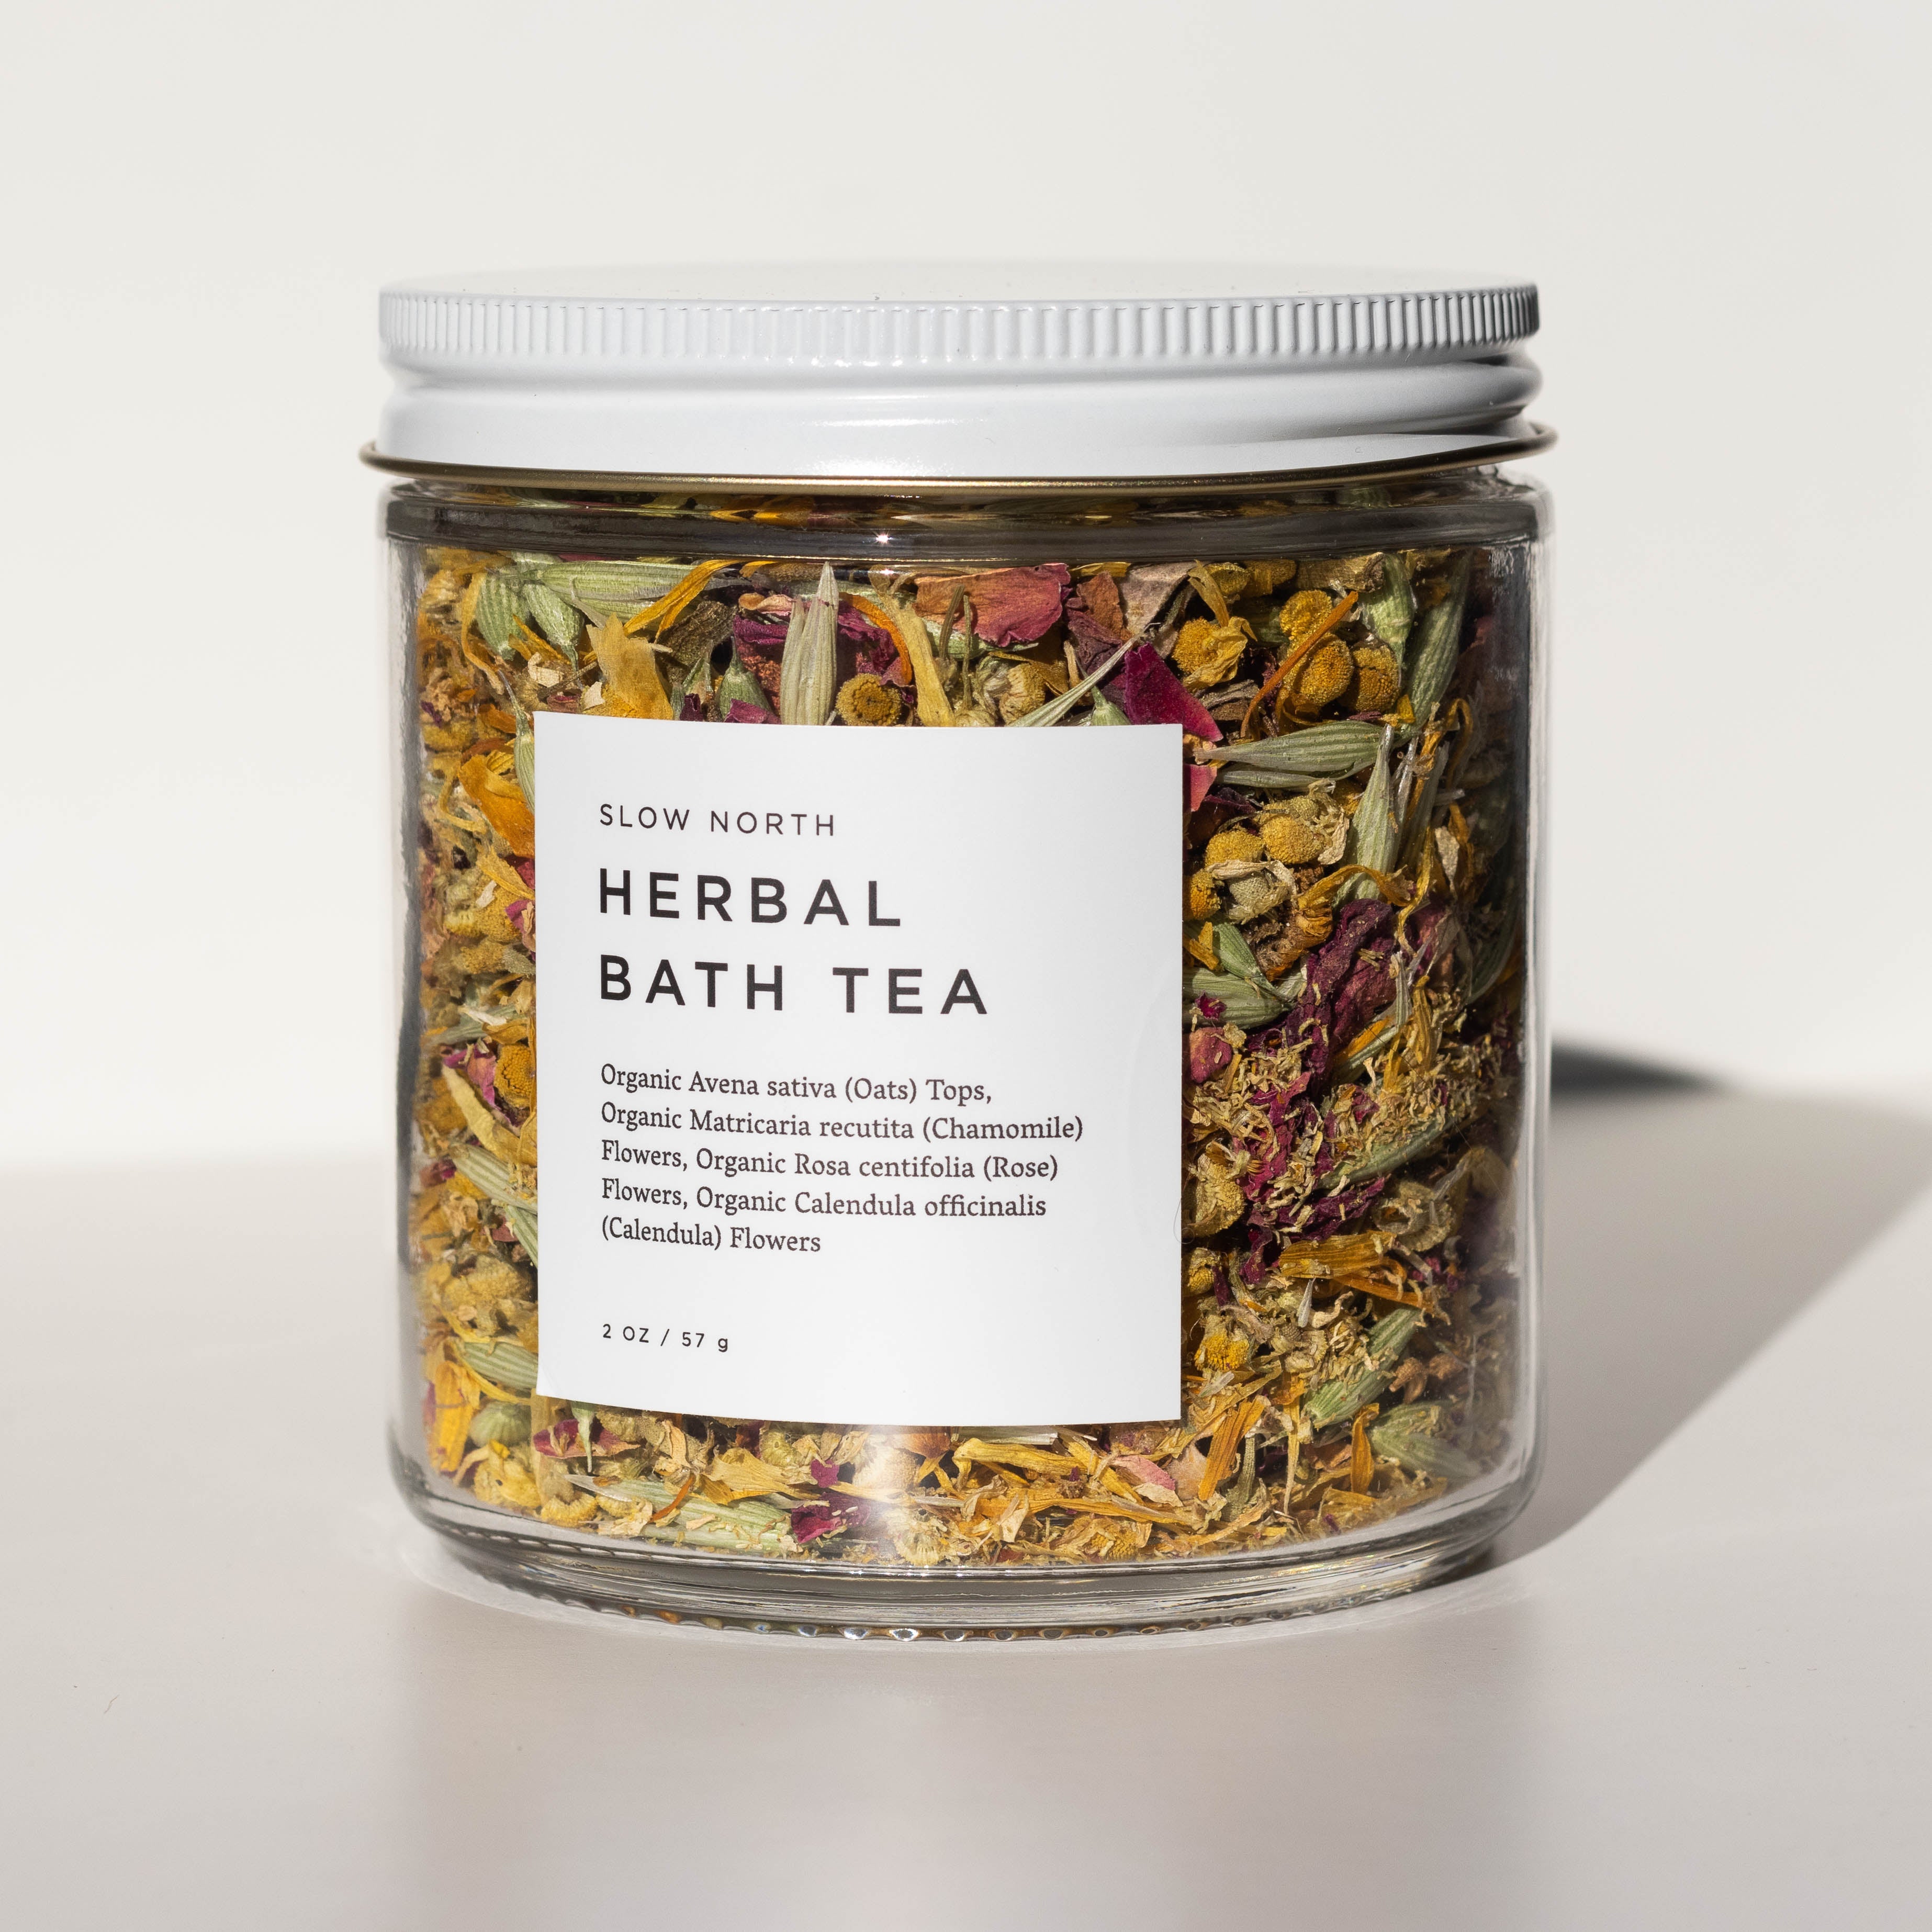 Bath Tea Bags with Spa Salts & Herbs - Soothing